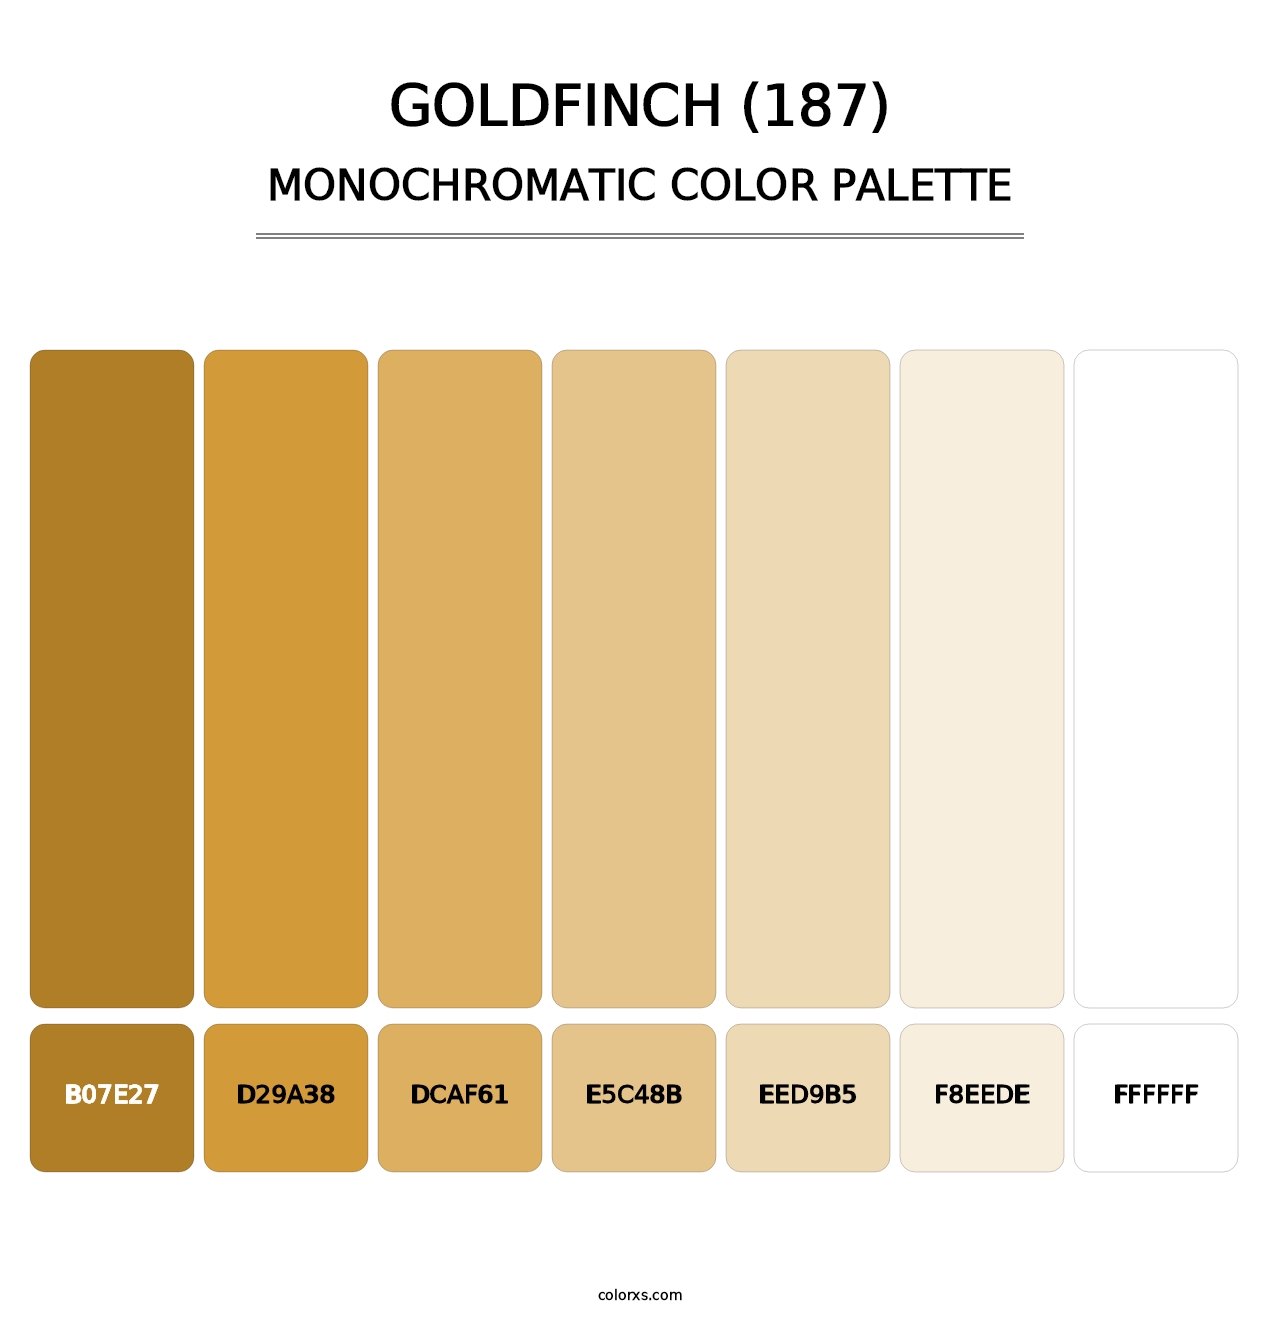 Goldfinch (187) - Monochromatic Color Palette